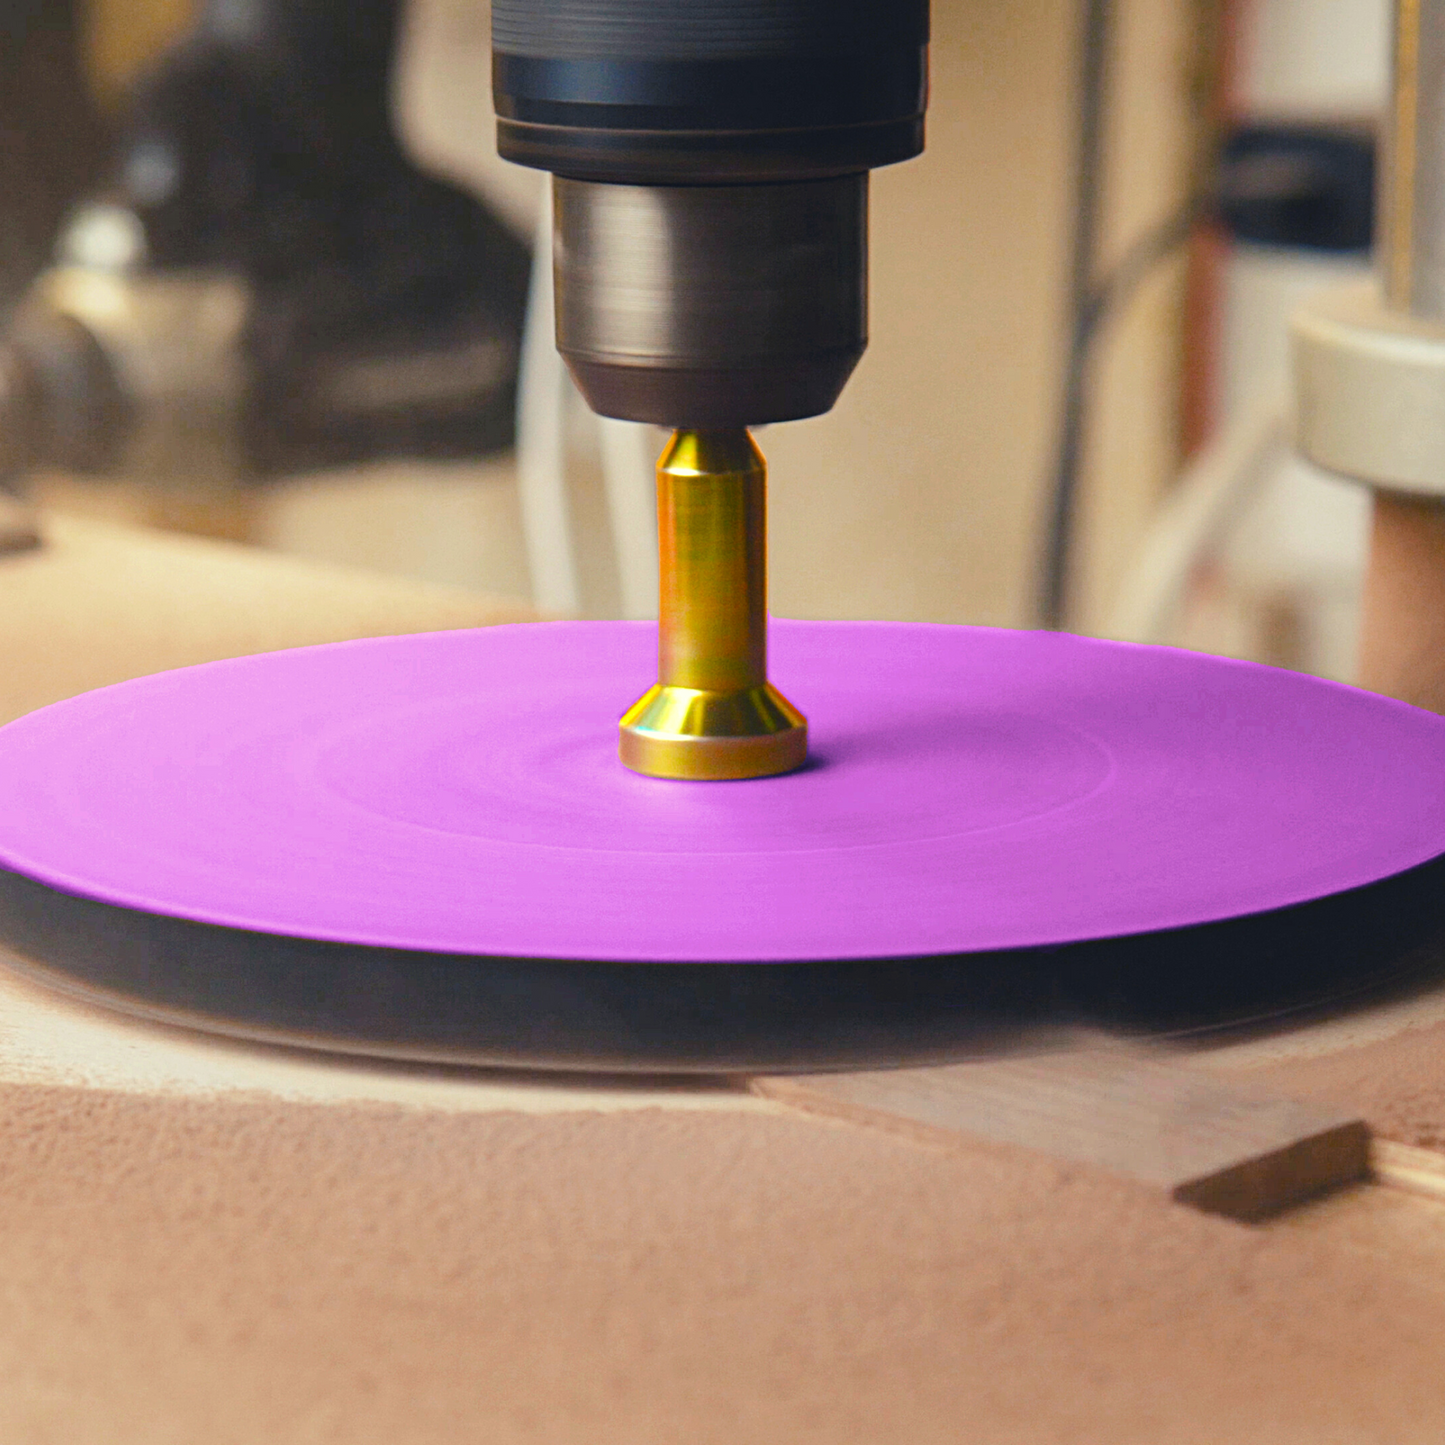 6" Disc Sander Kit for Drill Press/Lathe/CNC + Sandpaper